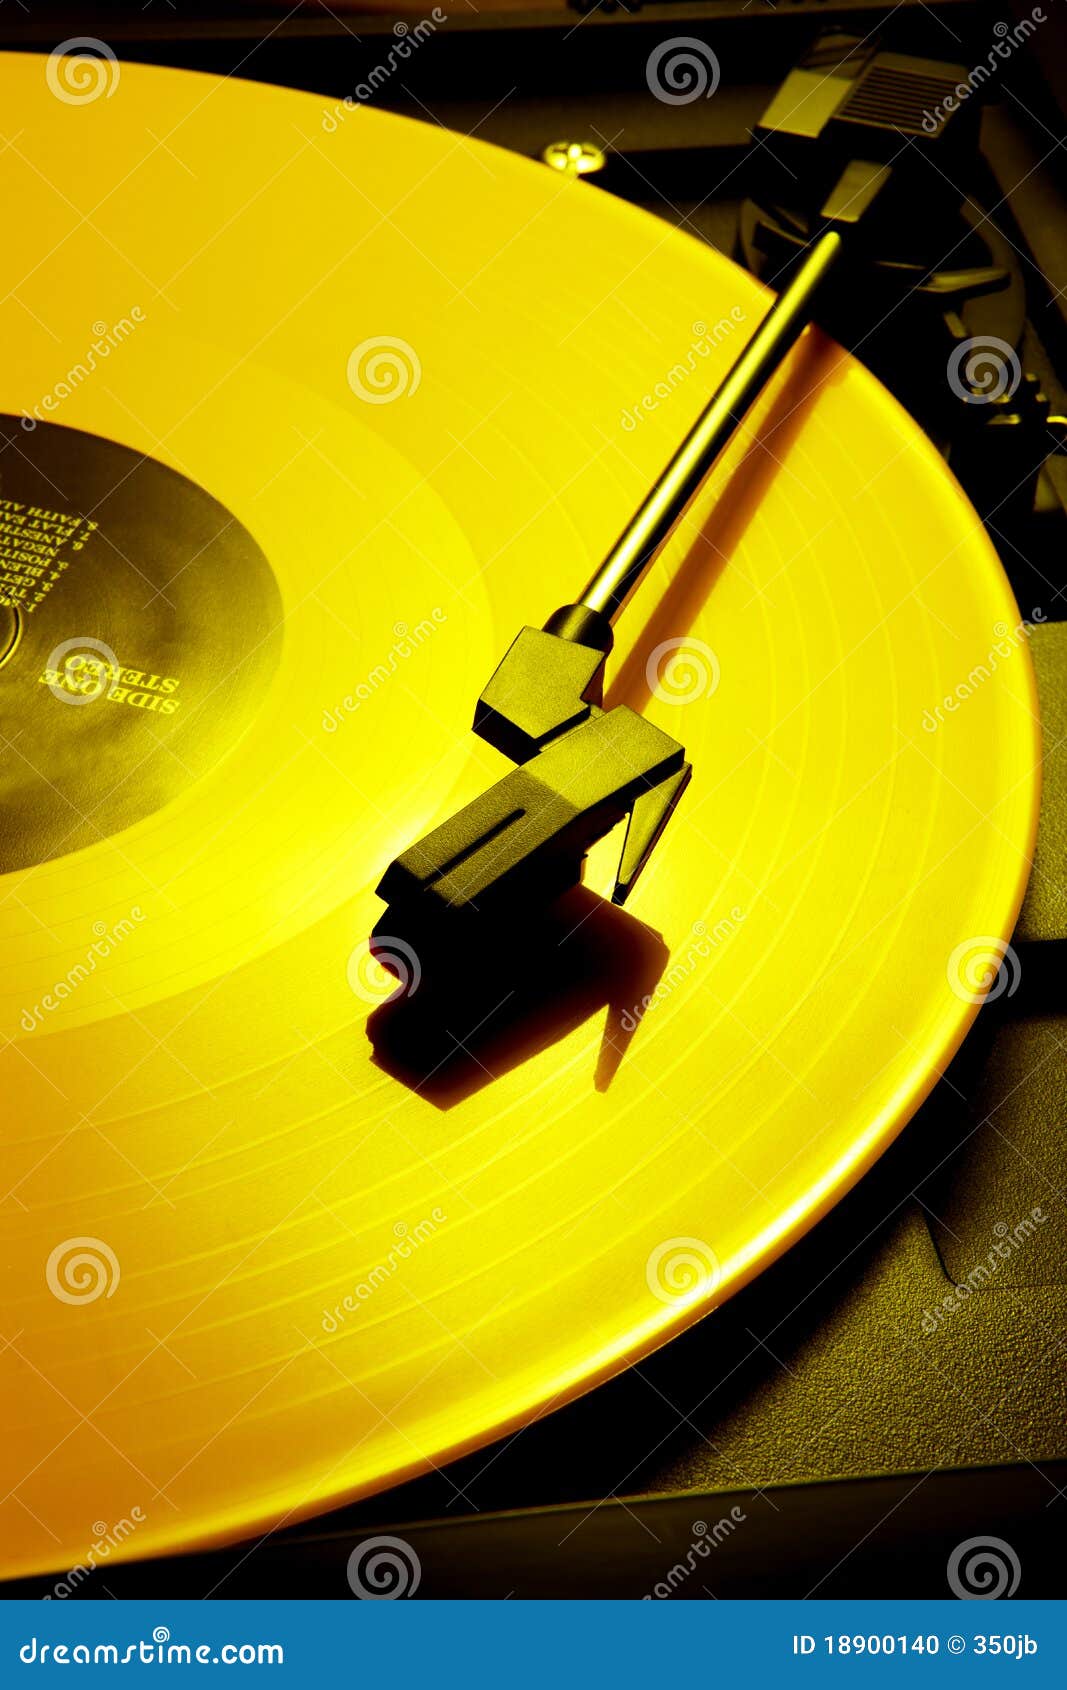 yellow-record-18900140.jpg